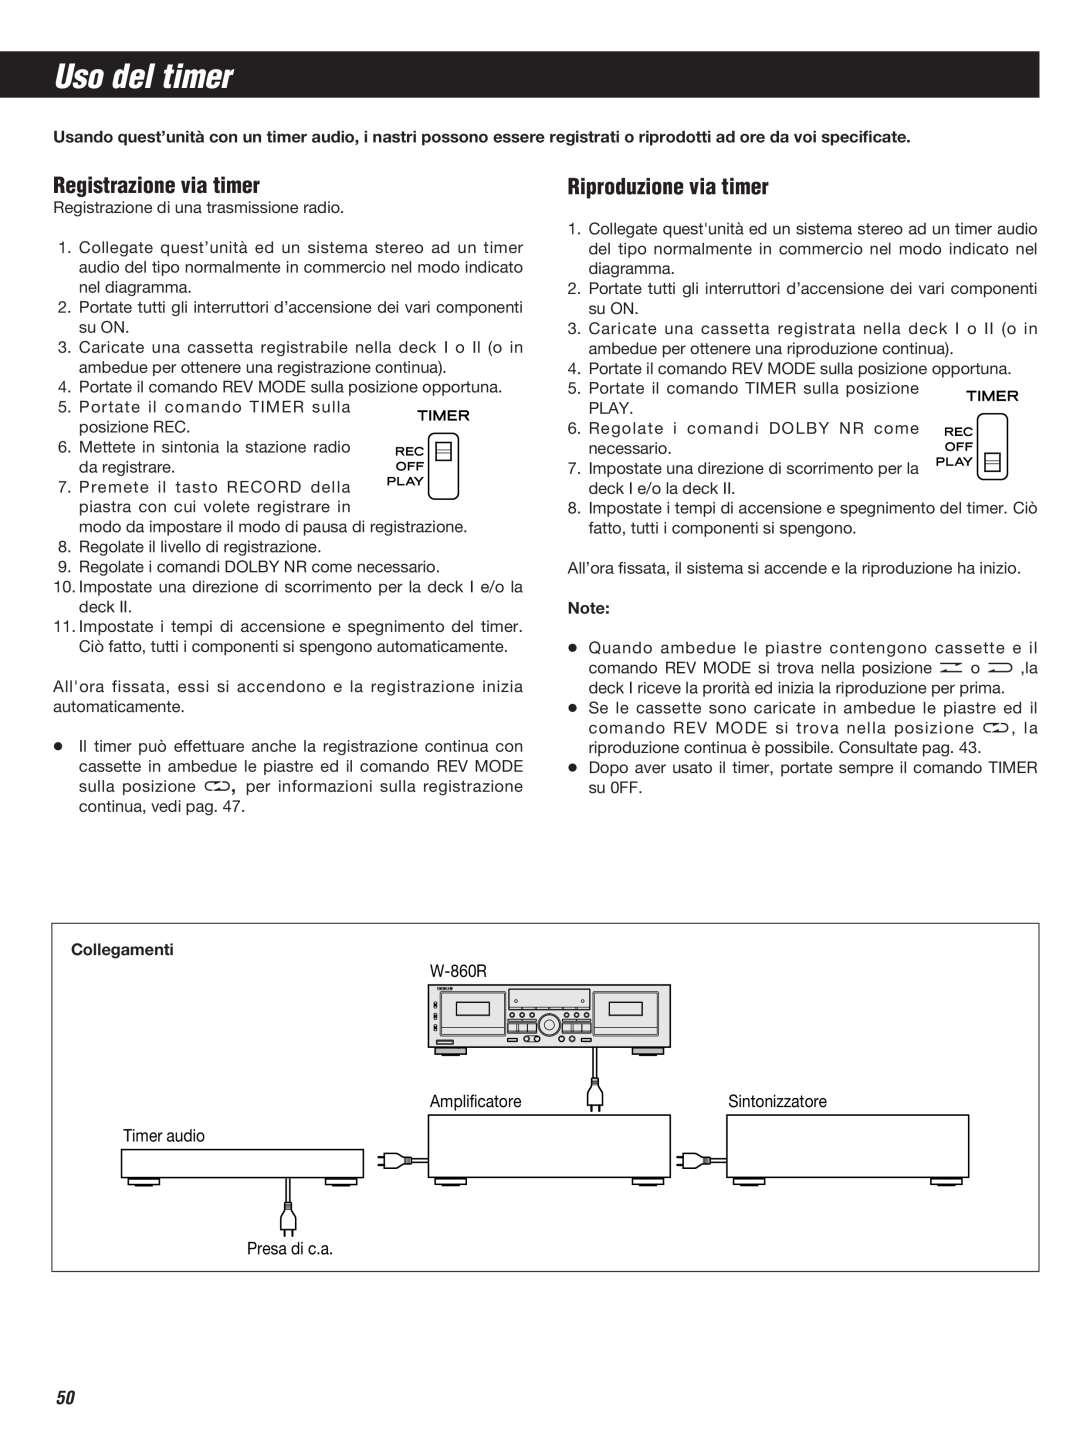 Teac W-860R owner manual Uso del timer, Registrazione via timer, Riproduzione via timer 